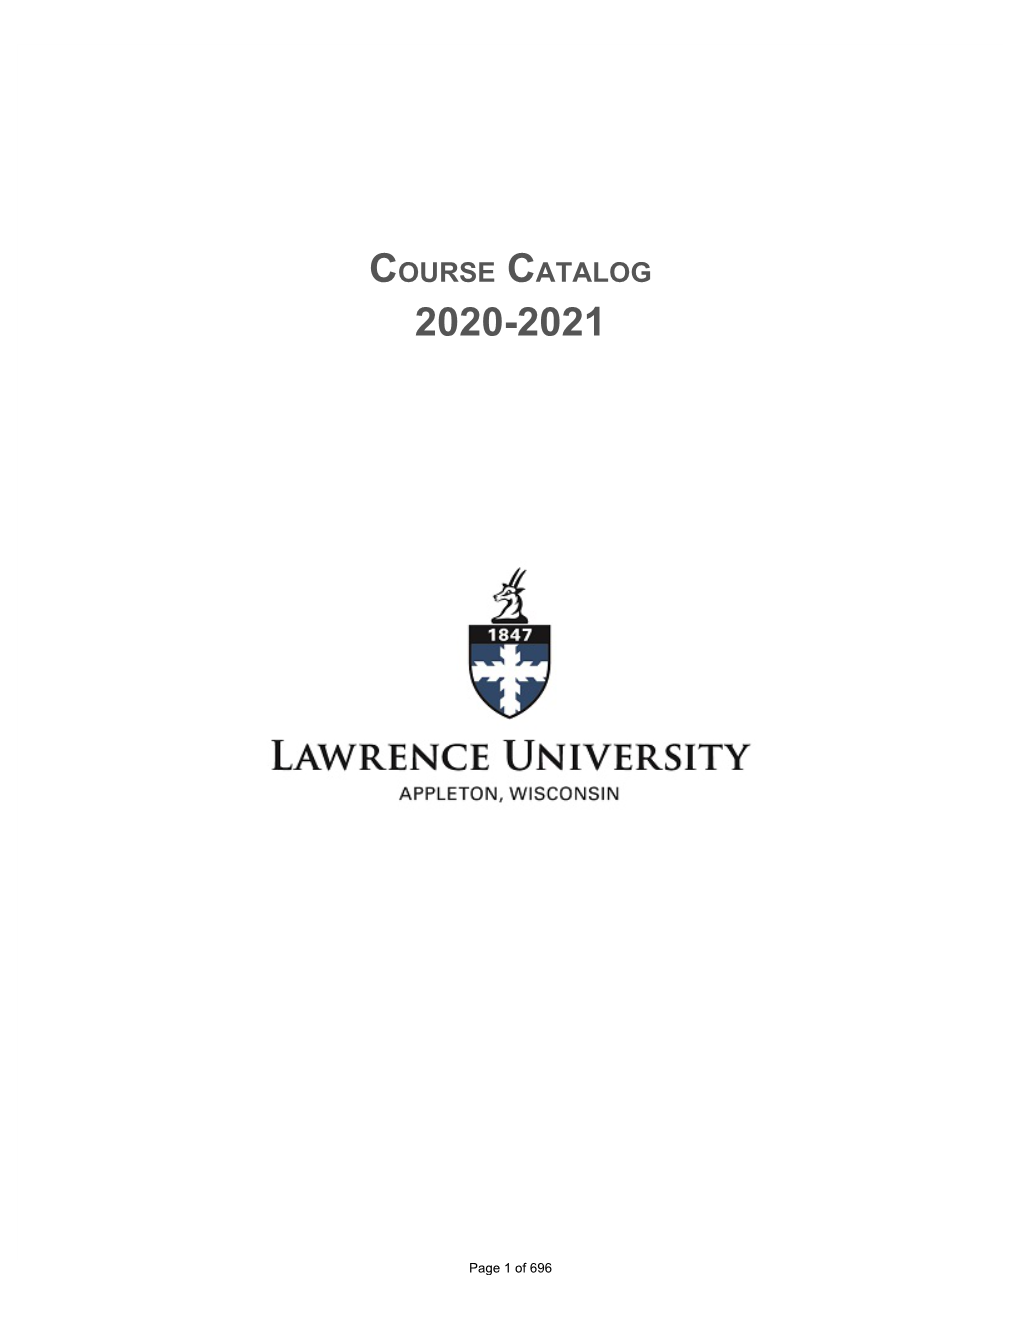 Lawrence Course Catalog | Lawrence University